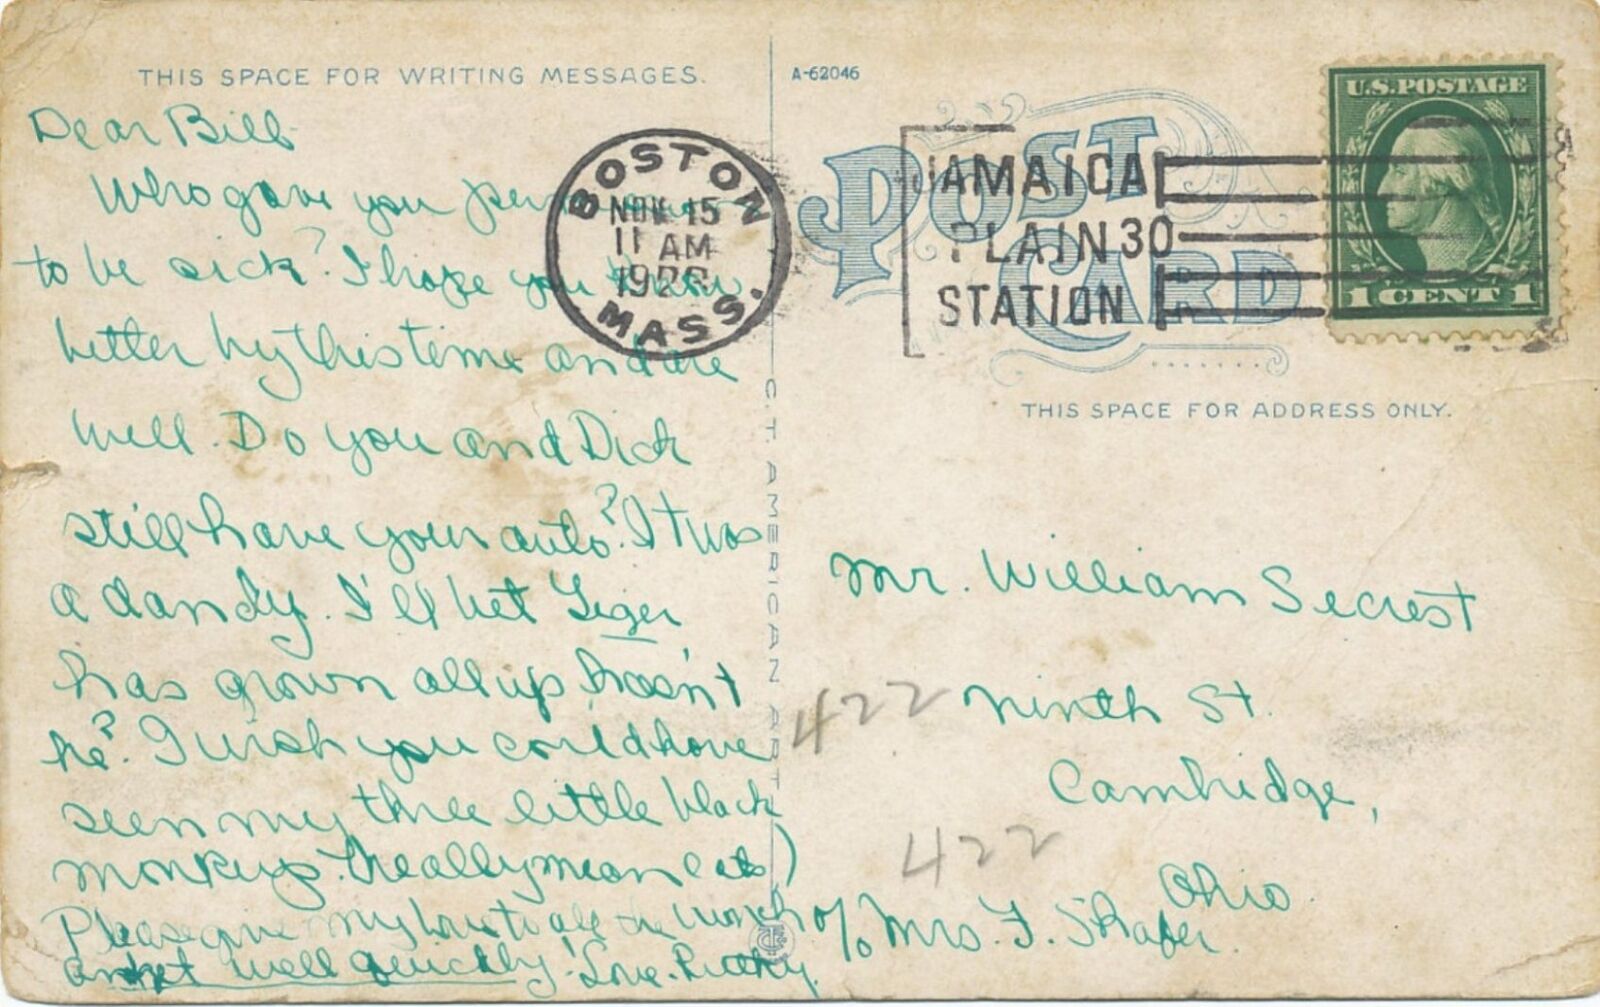 Boston MASS 1923 JAMAICA PLAIN 30 STATION Cancel/Postcard - State House